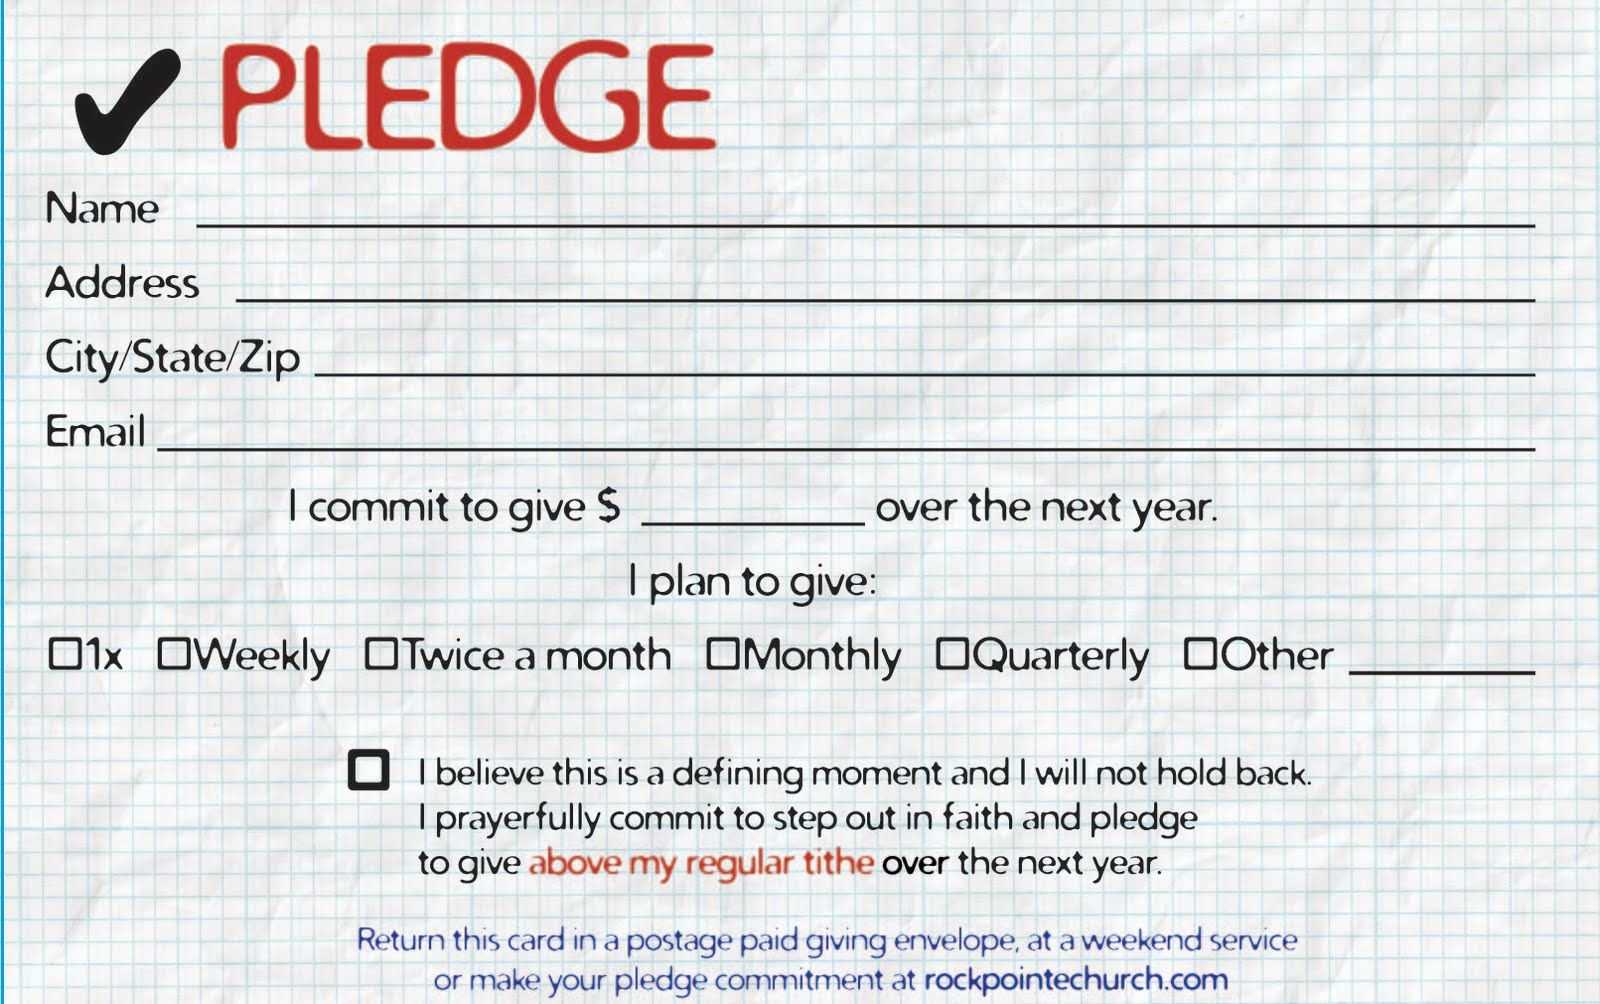 Pledge Cards For Churches | Pledge Card Templates | Card For Church Pledge Card Template